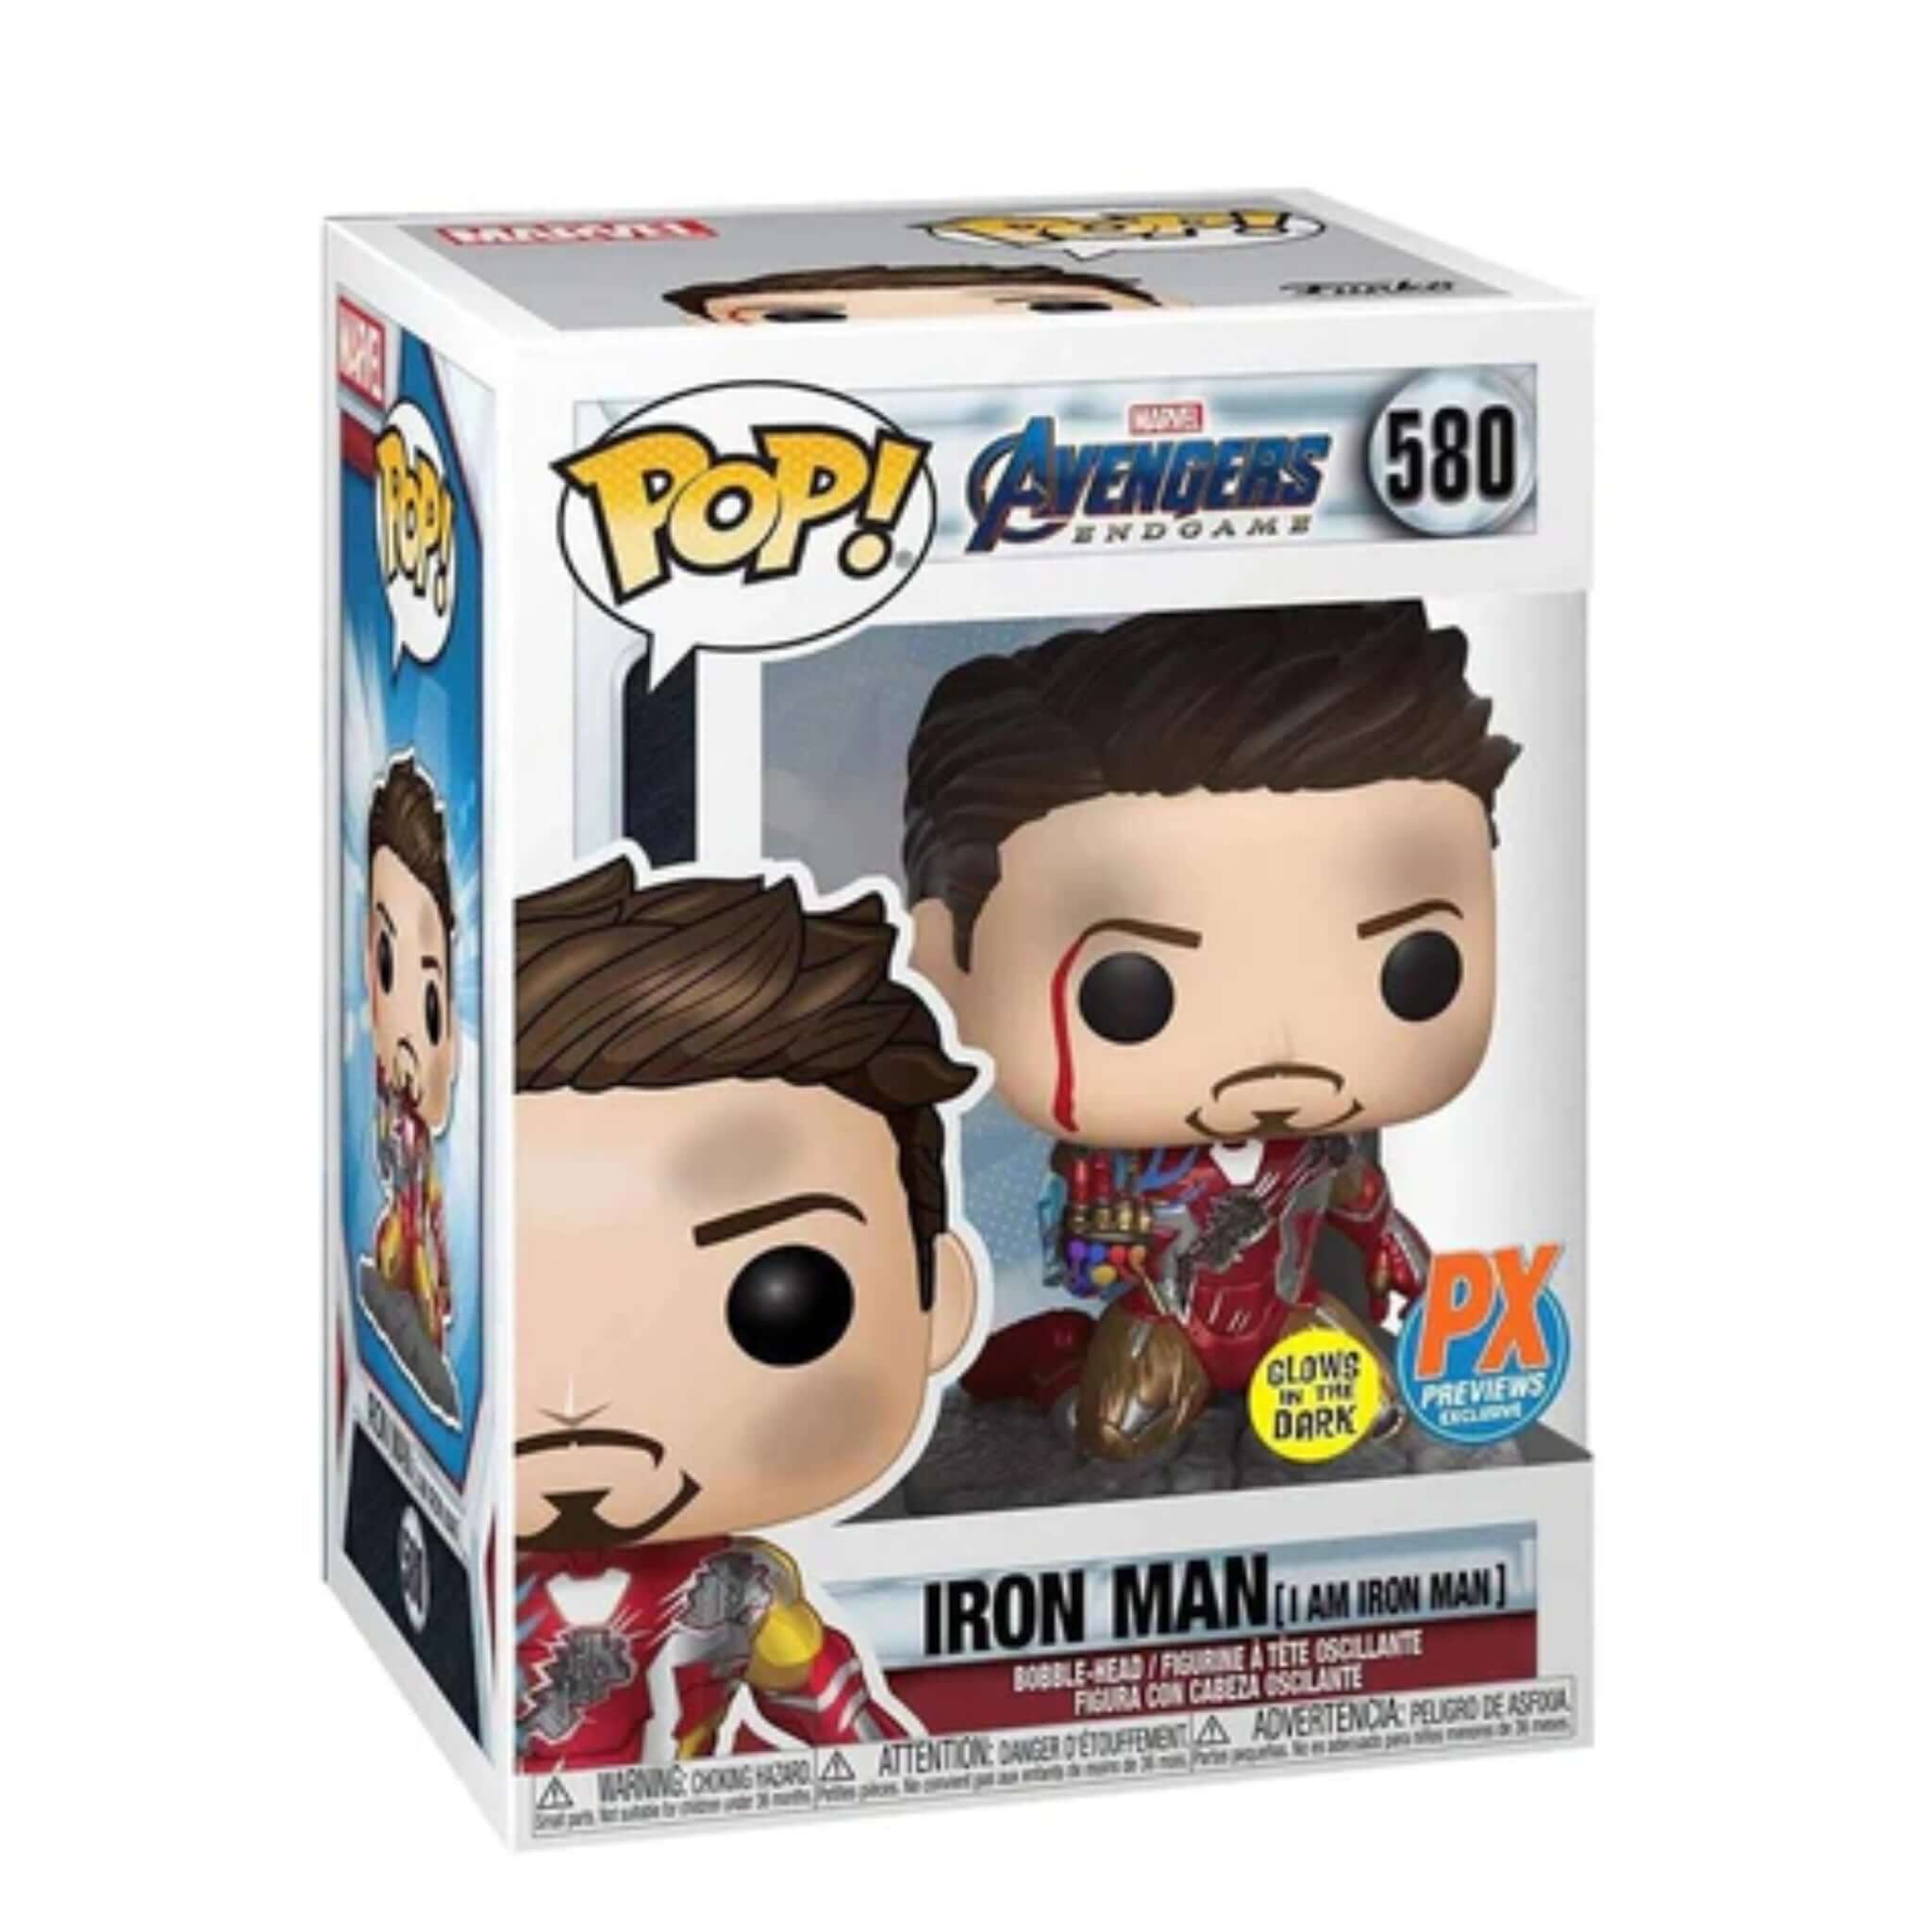 Iron Man [I am Iron Man] (GITD) Funko Pop! PX EXCLUSIVE